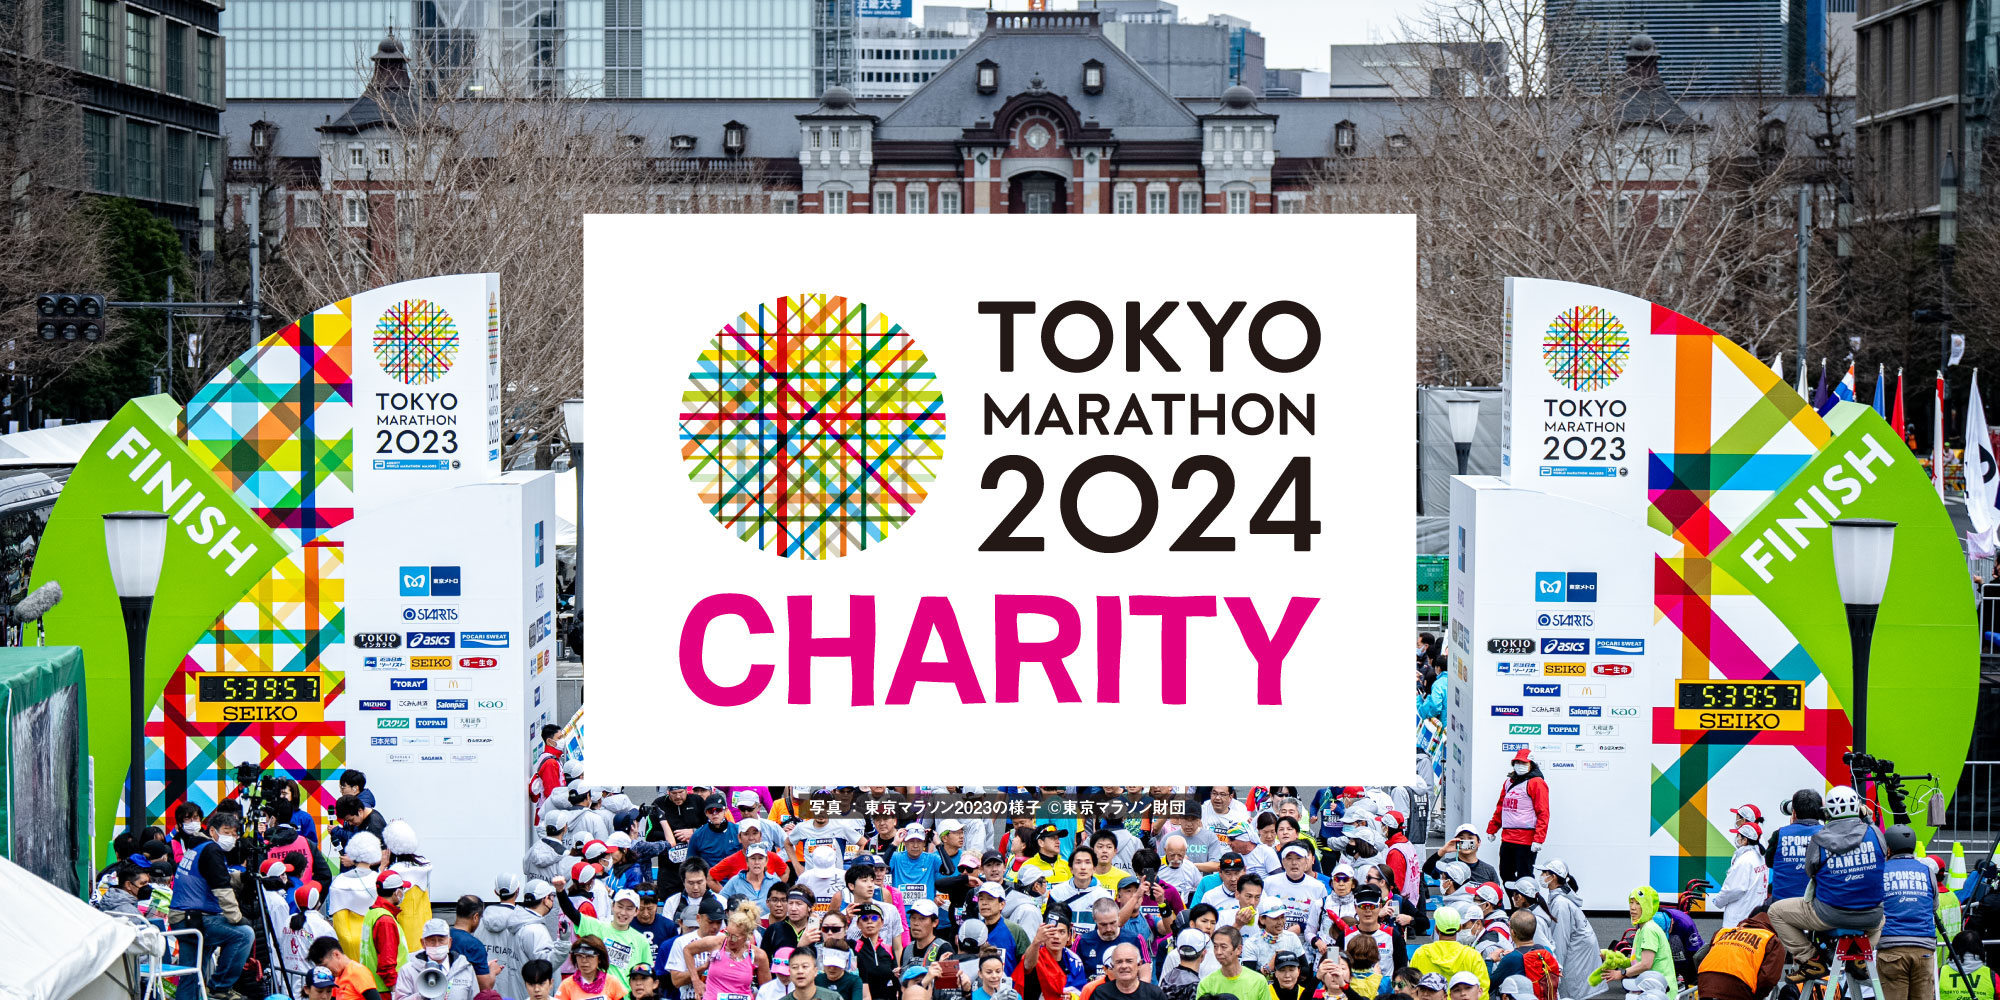 Tokyo Marathon 2024 Charity | JOICFP - Japanese Organization for ...